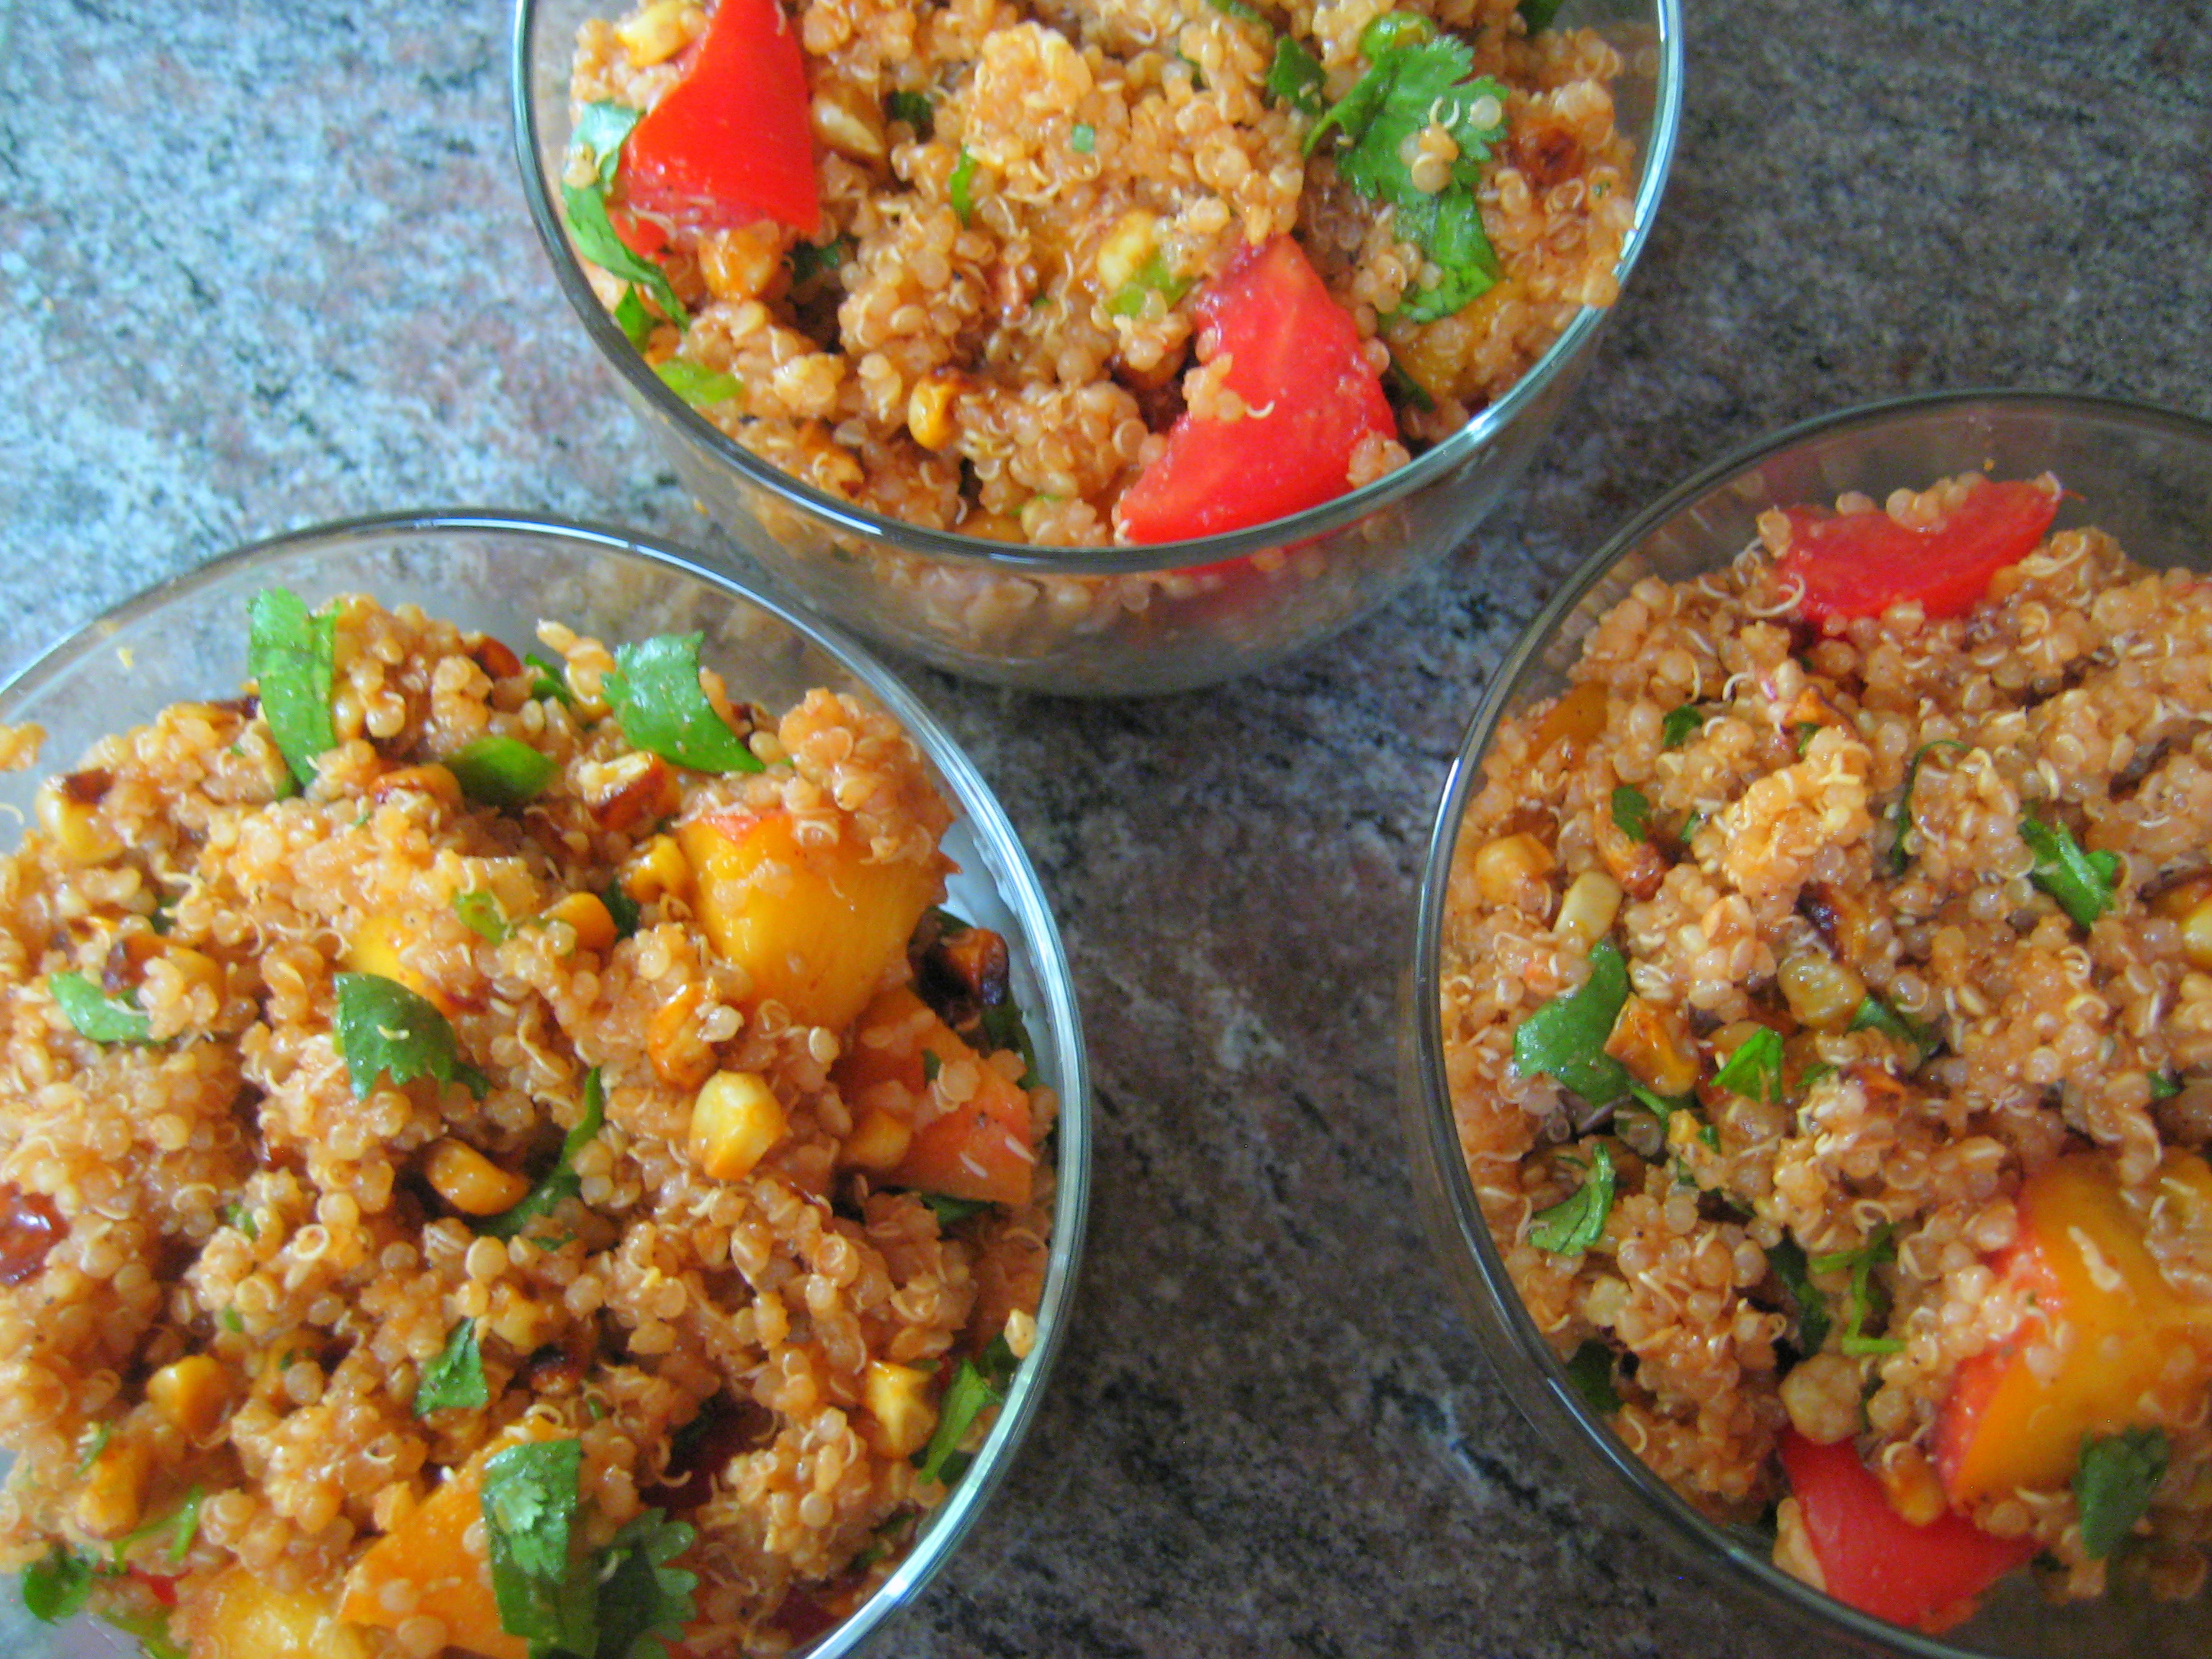 vegan barbecue quinoa salad with peaches, corn, and tomatoes